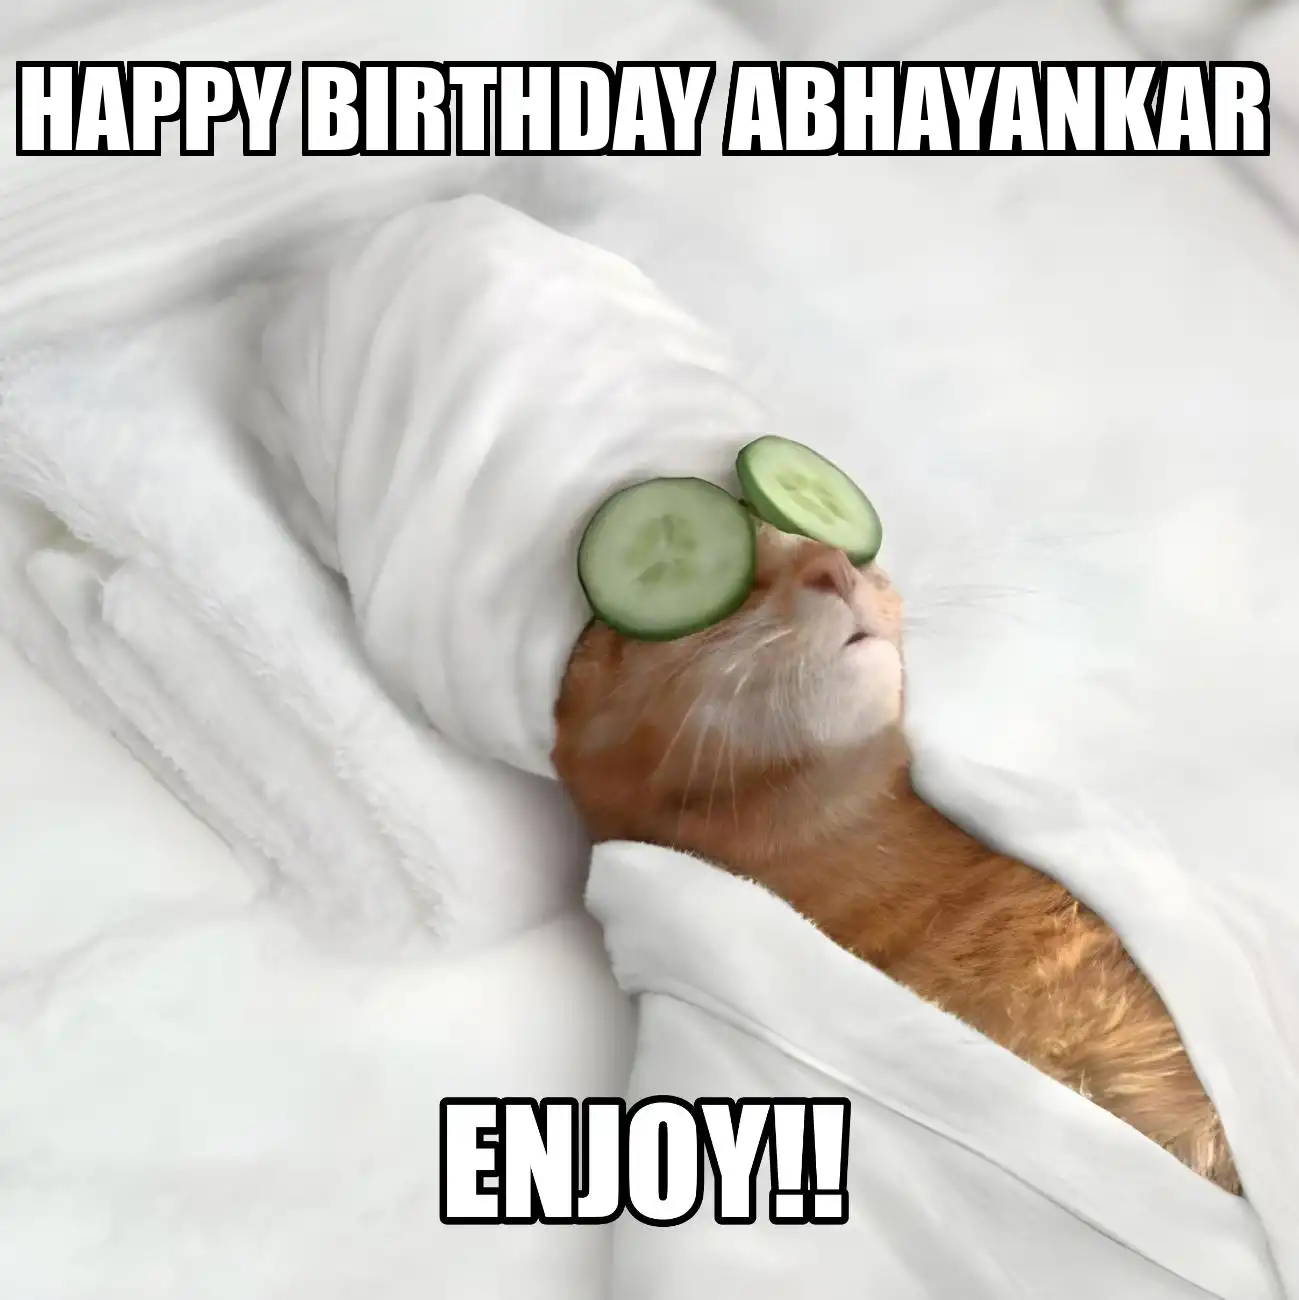 Happy Birthday Abhayankar Enjoy Cat Meme